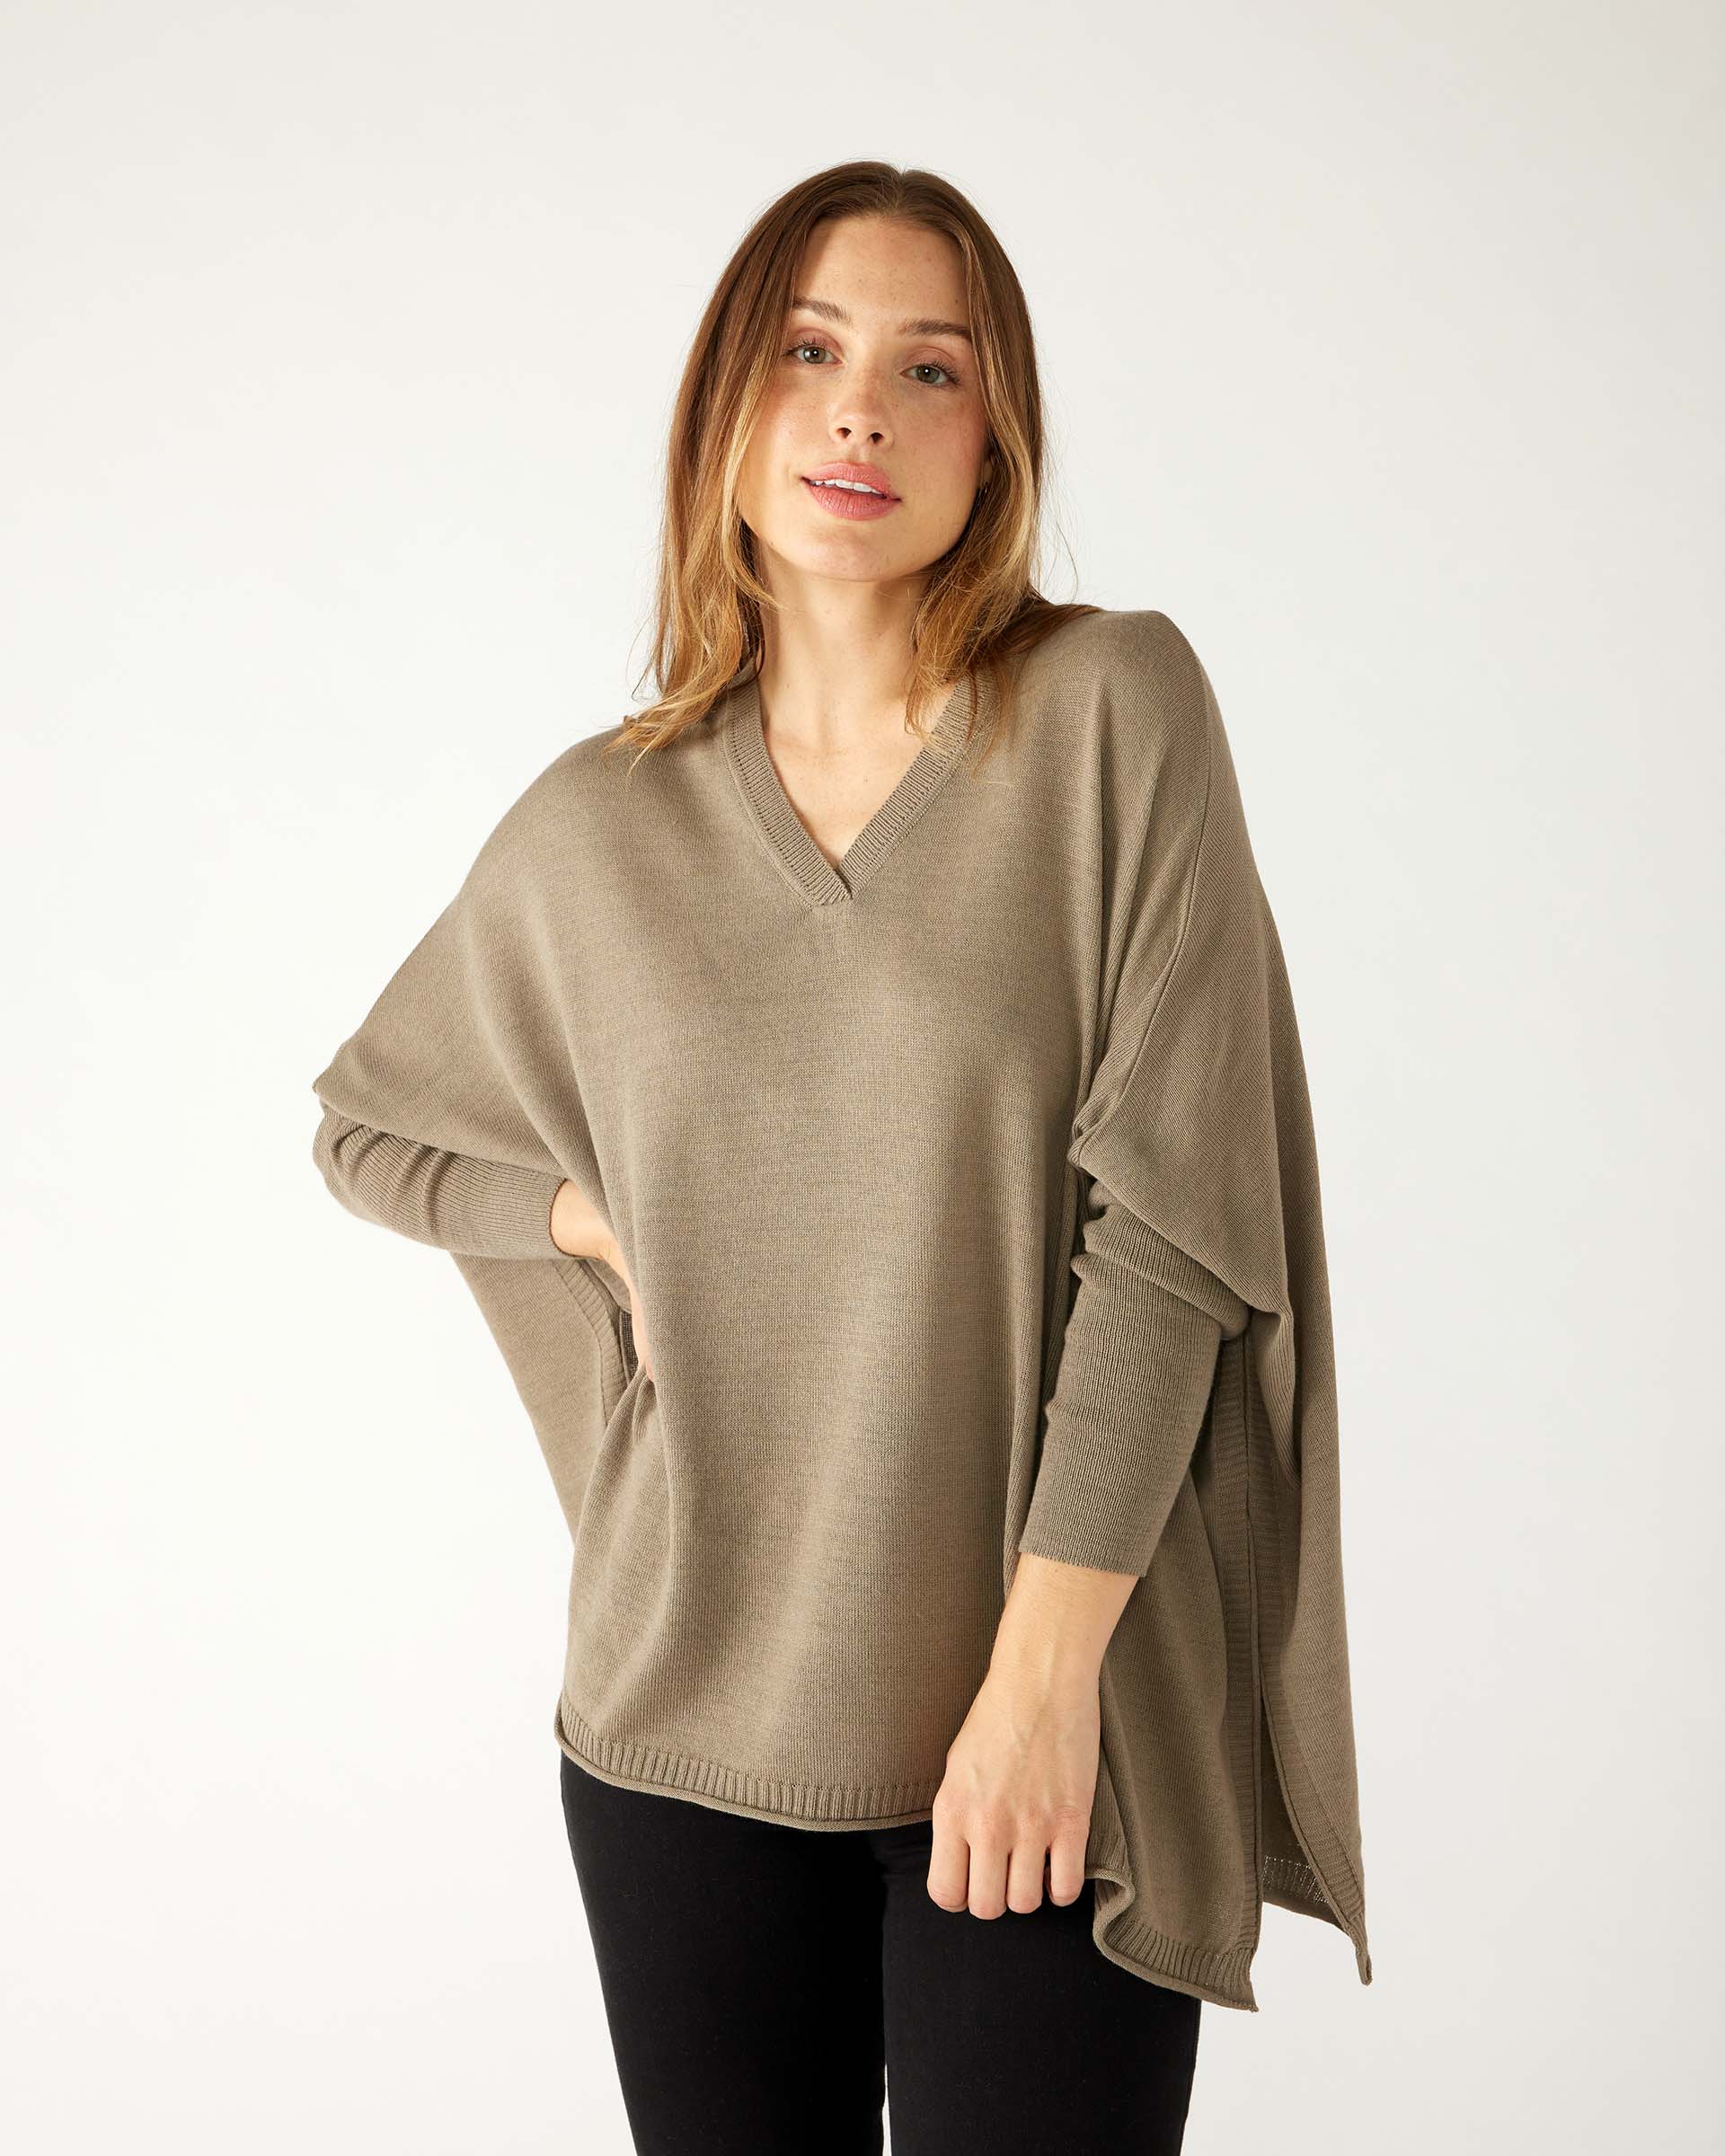 woman wearing mersea catalina v-neck sweater in hazelnut color